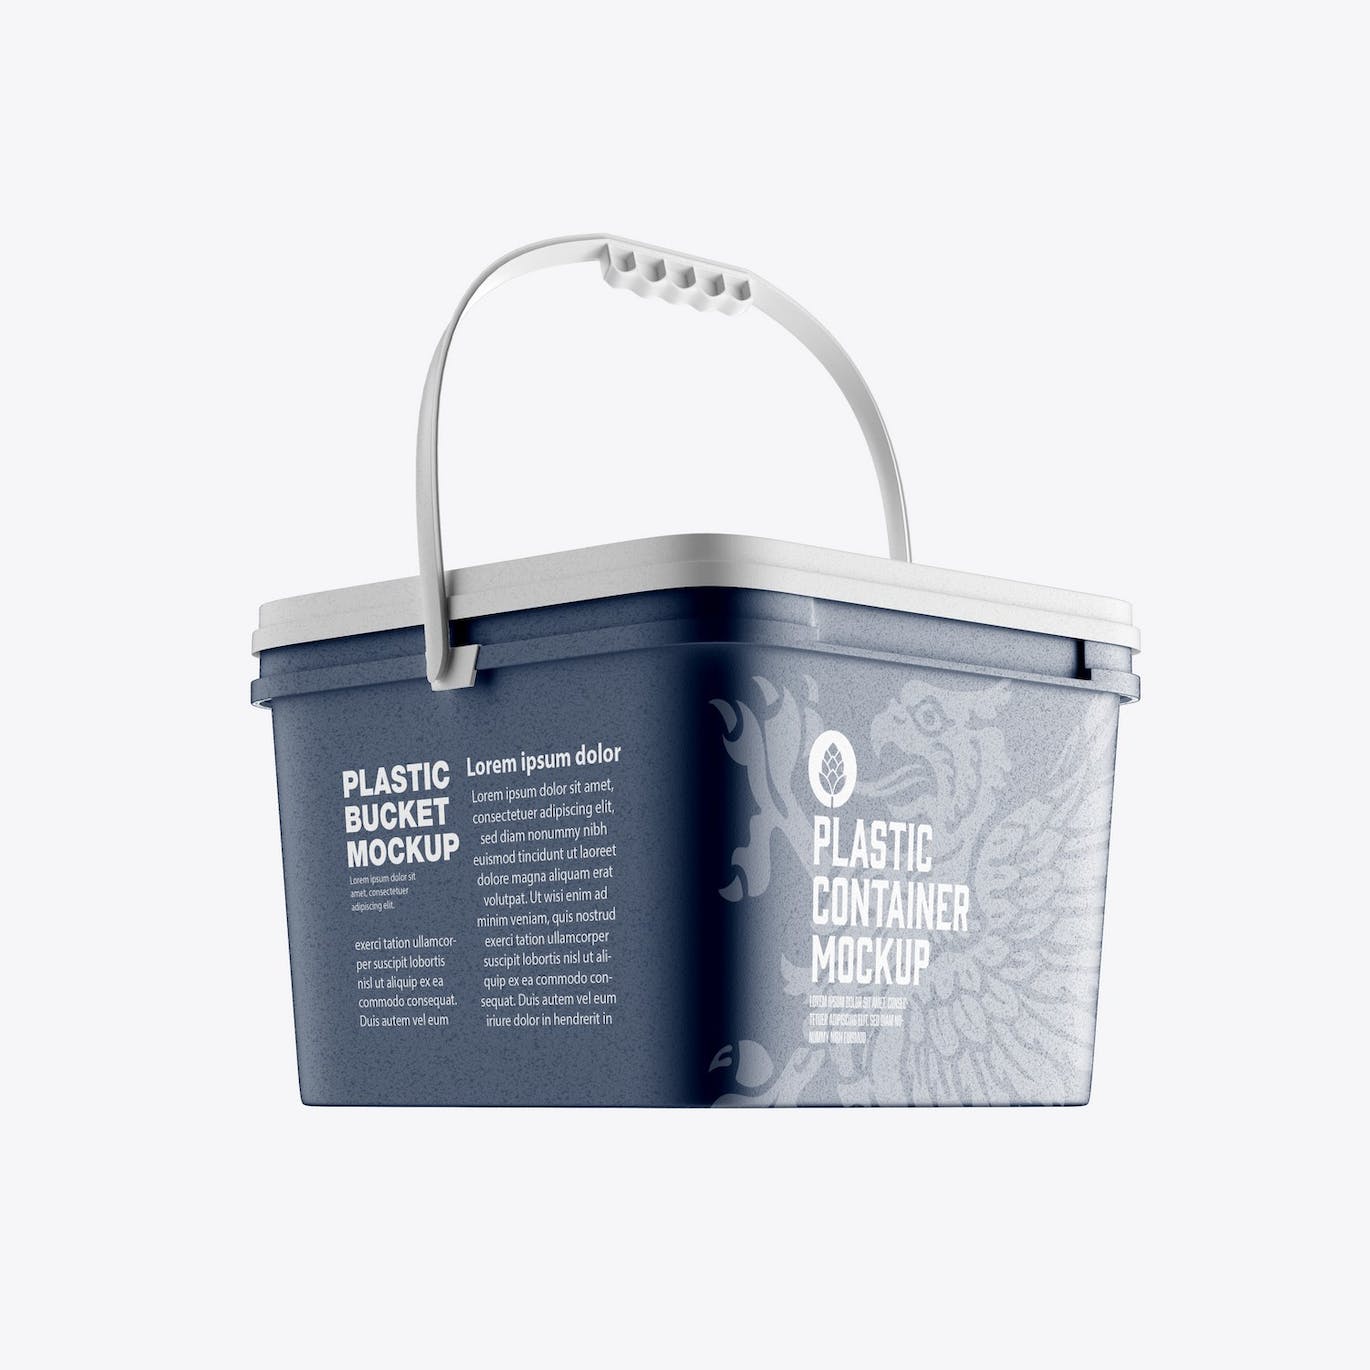 方形塑料容器包装设计样机 Square Plastic Container Mockup 样机素材 第15张